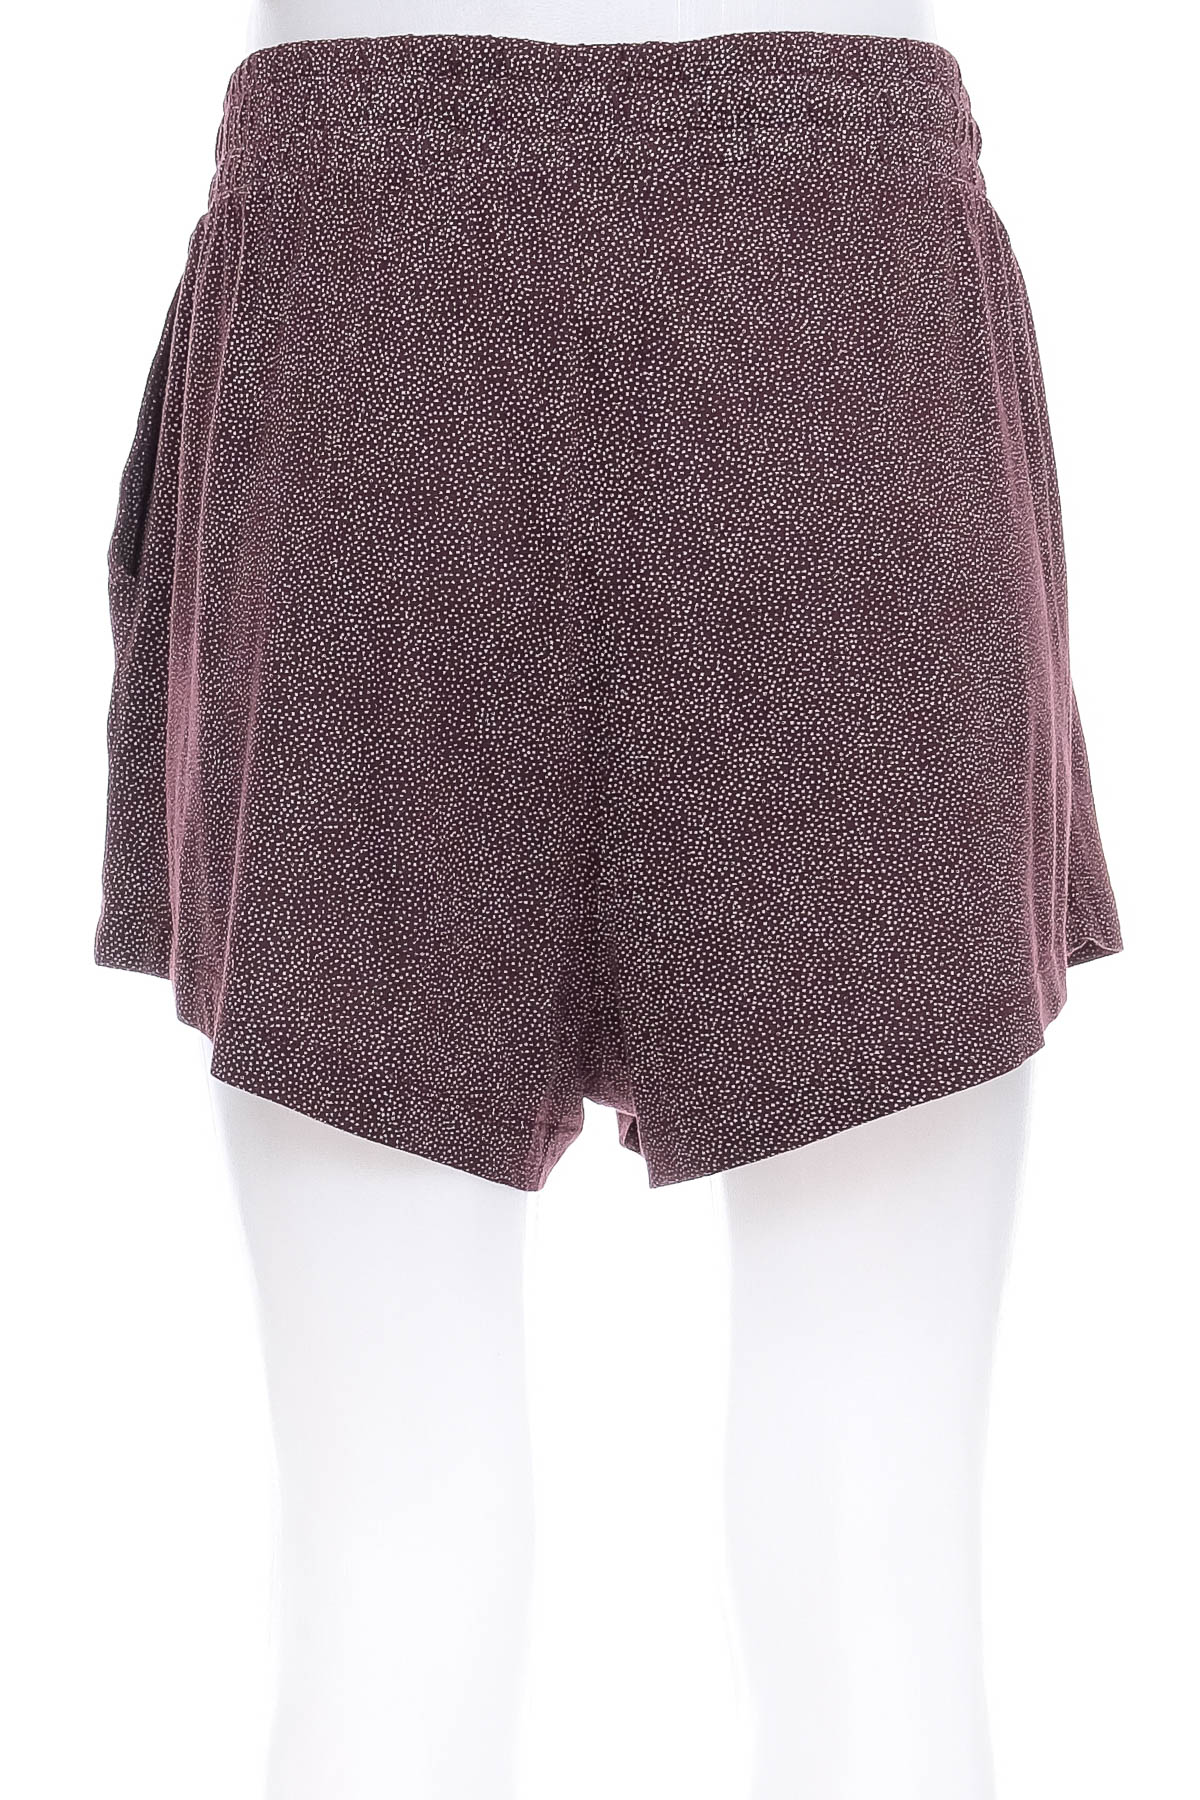 Krótkie spodnie damskie - H&M Basic - 1